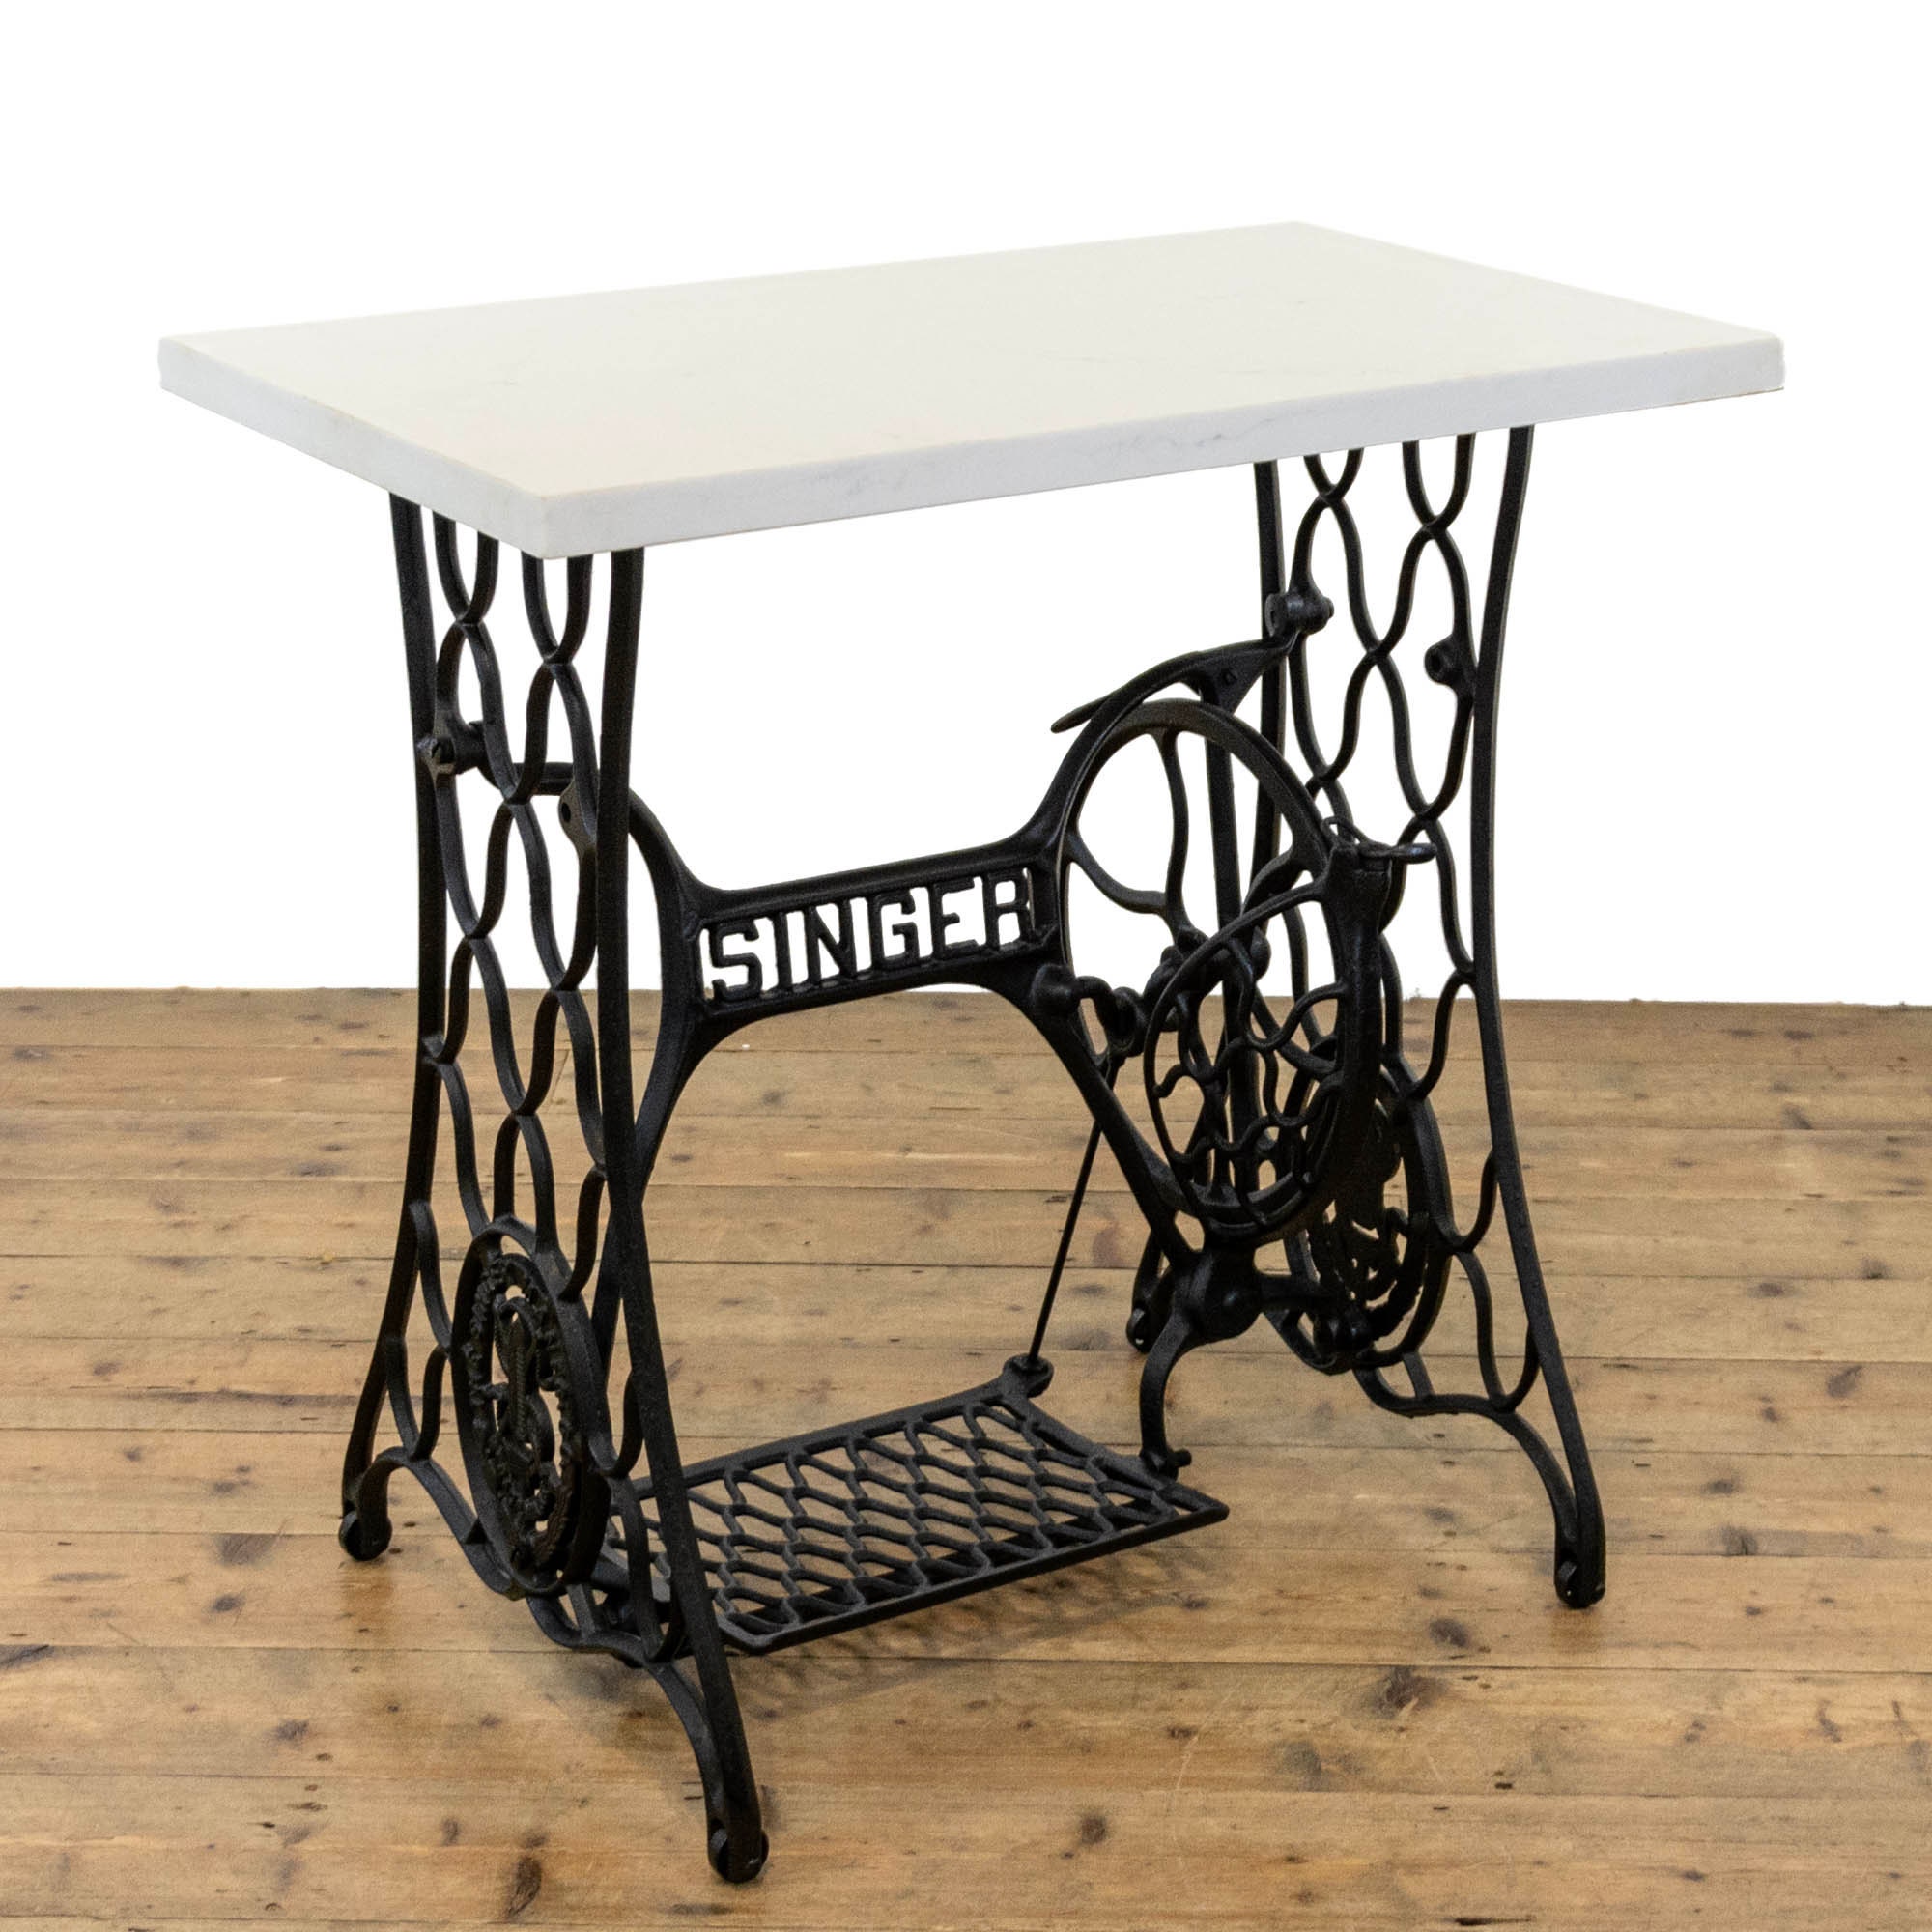 Granite Table w/Singer Iron Base - furniture - by owner - sale - craigslist